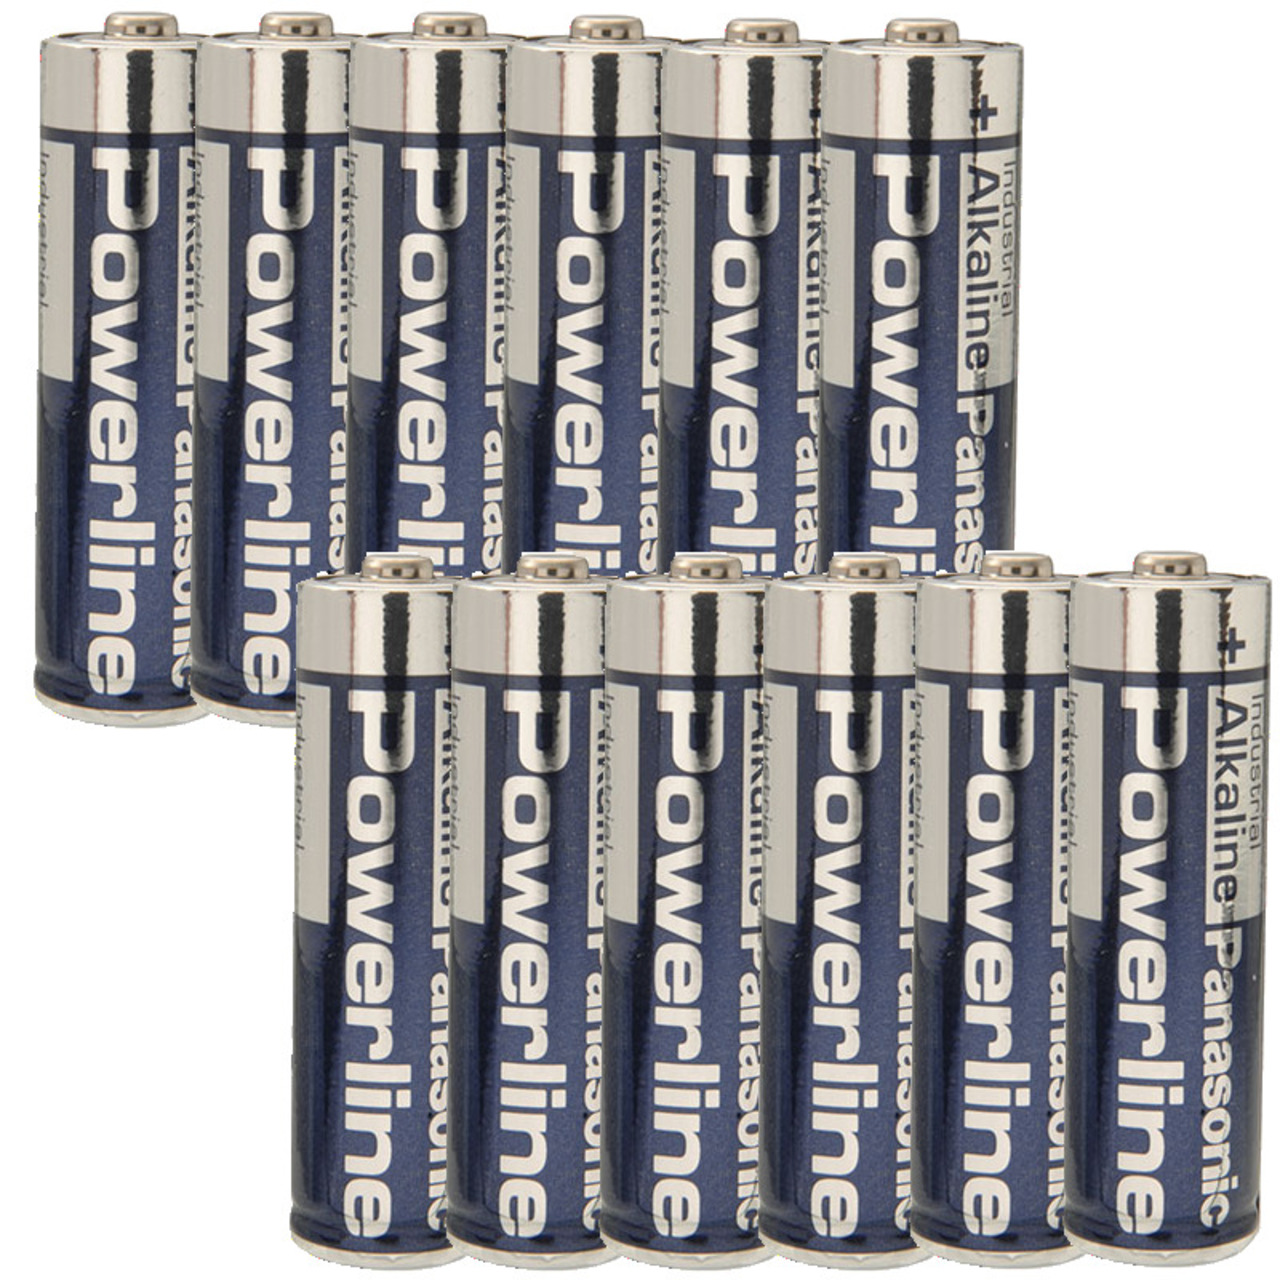 Panasonic 12er-Set Powerline Alkaline Batterie LR6 (Mignon-AA)